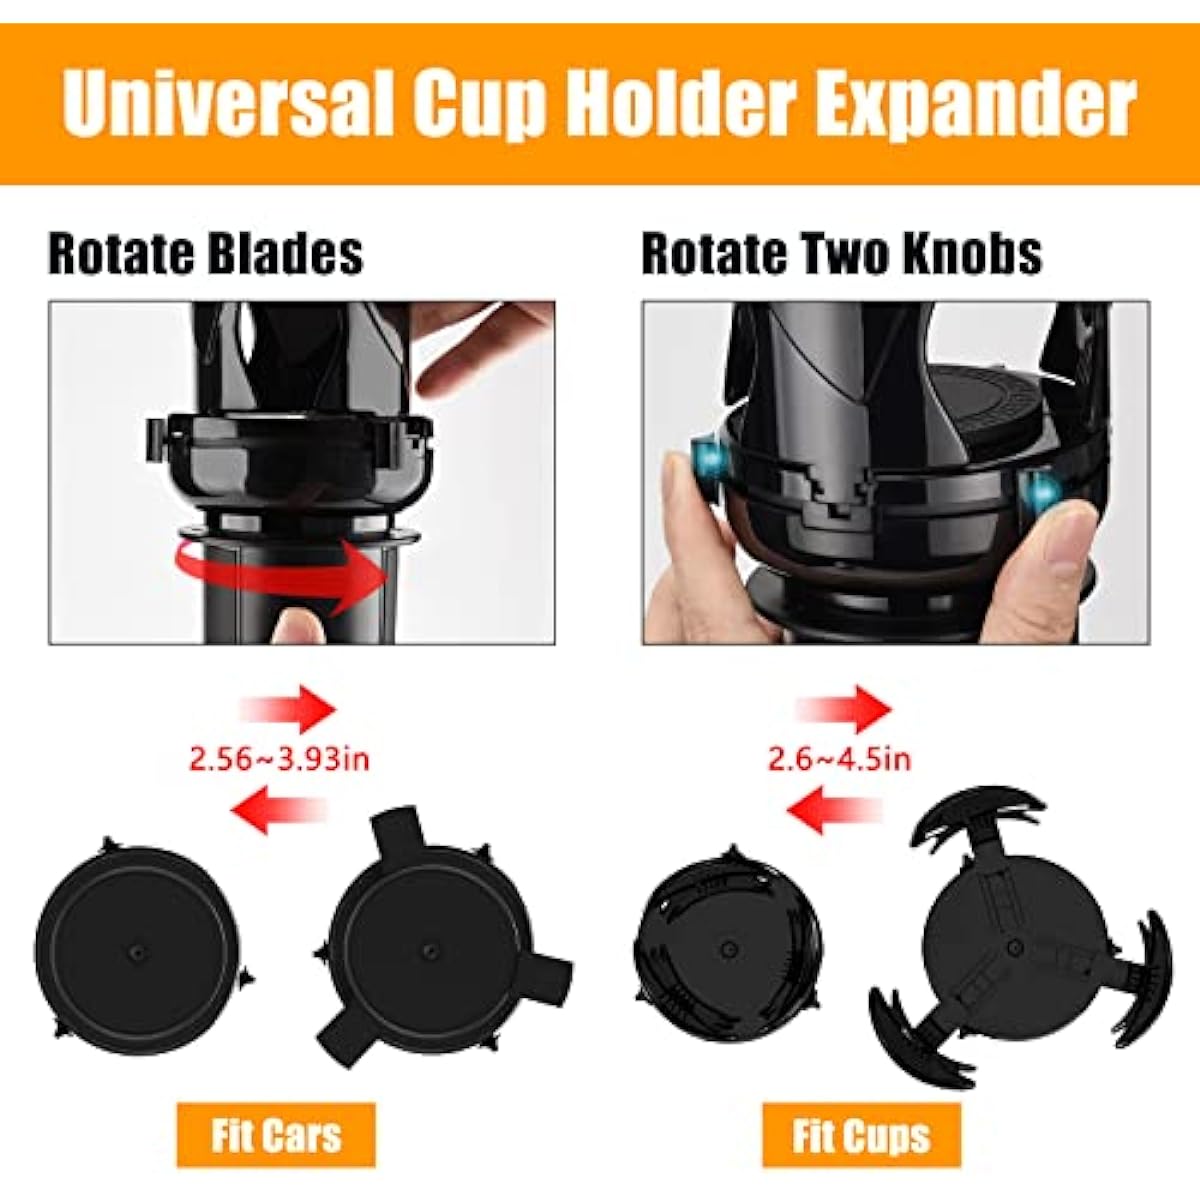 Car Cup Holder Expander Adapter Adjustable Organizer